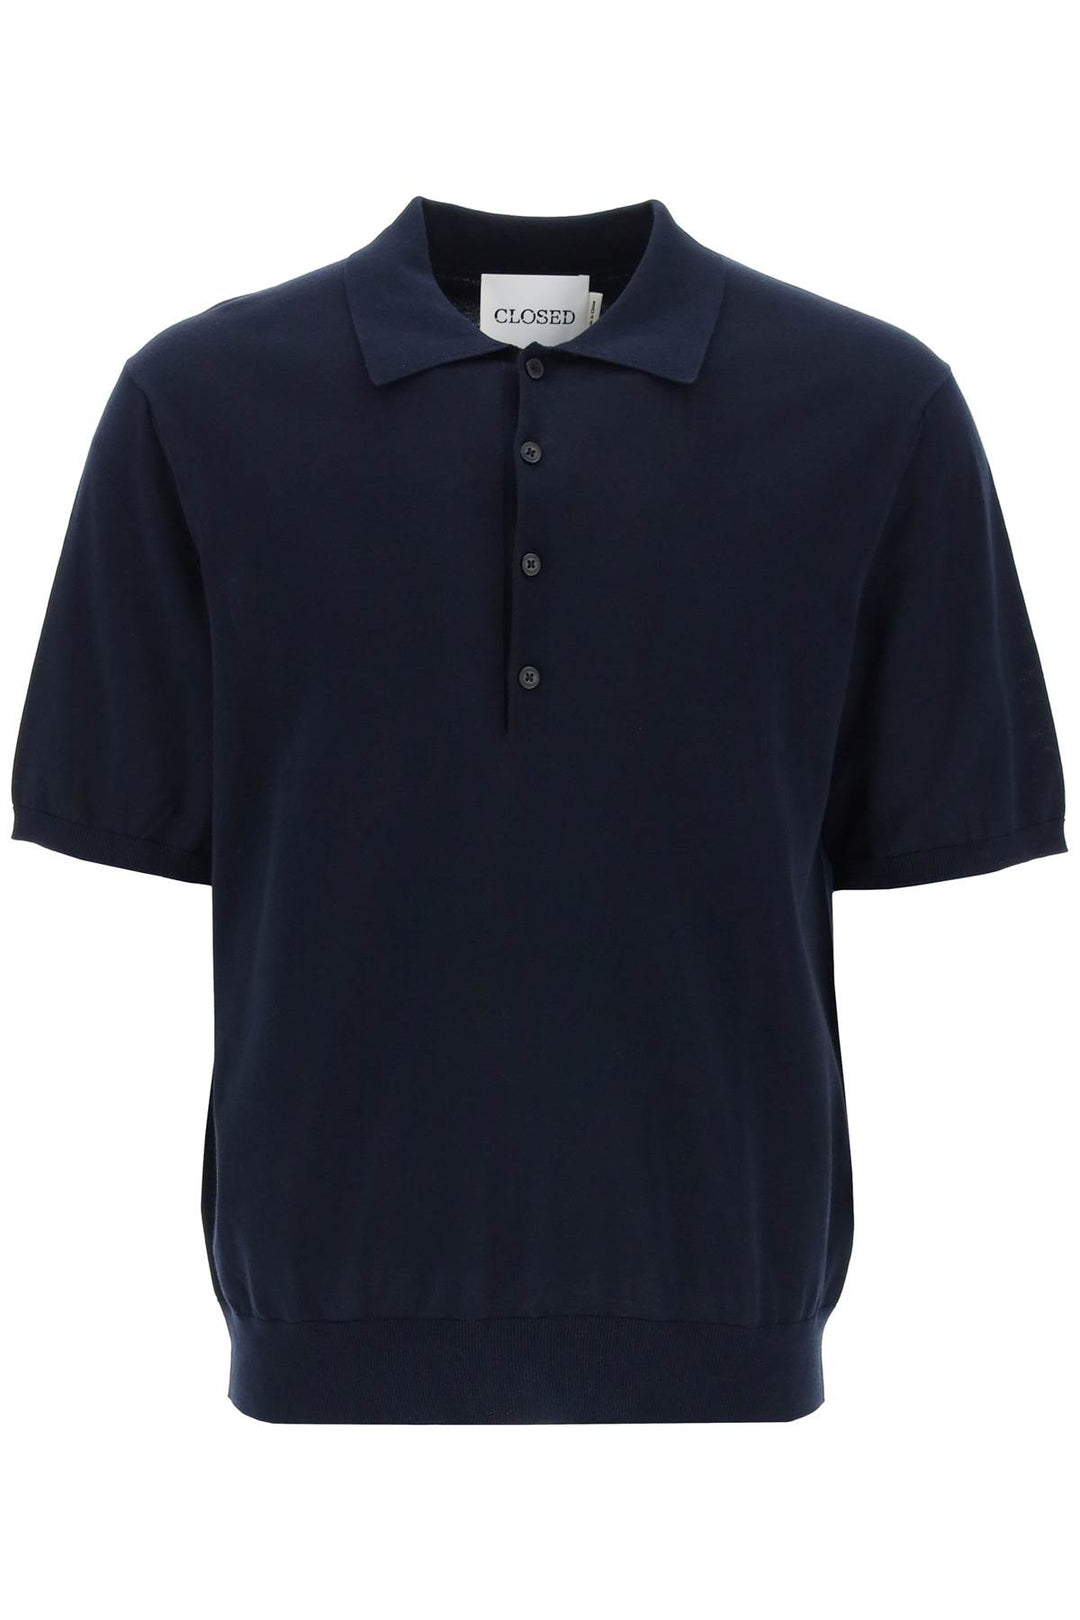 Closed Soft Fine Knit Polo Shirt   Blu